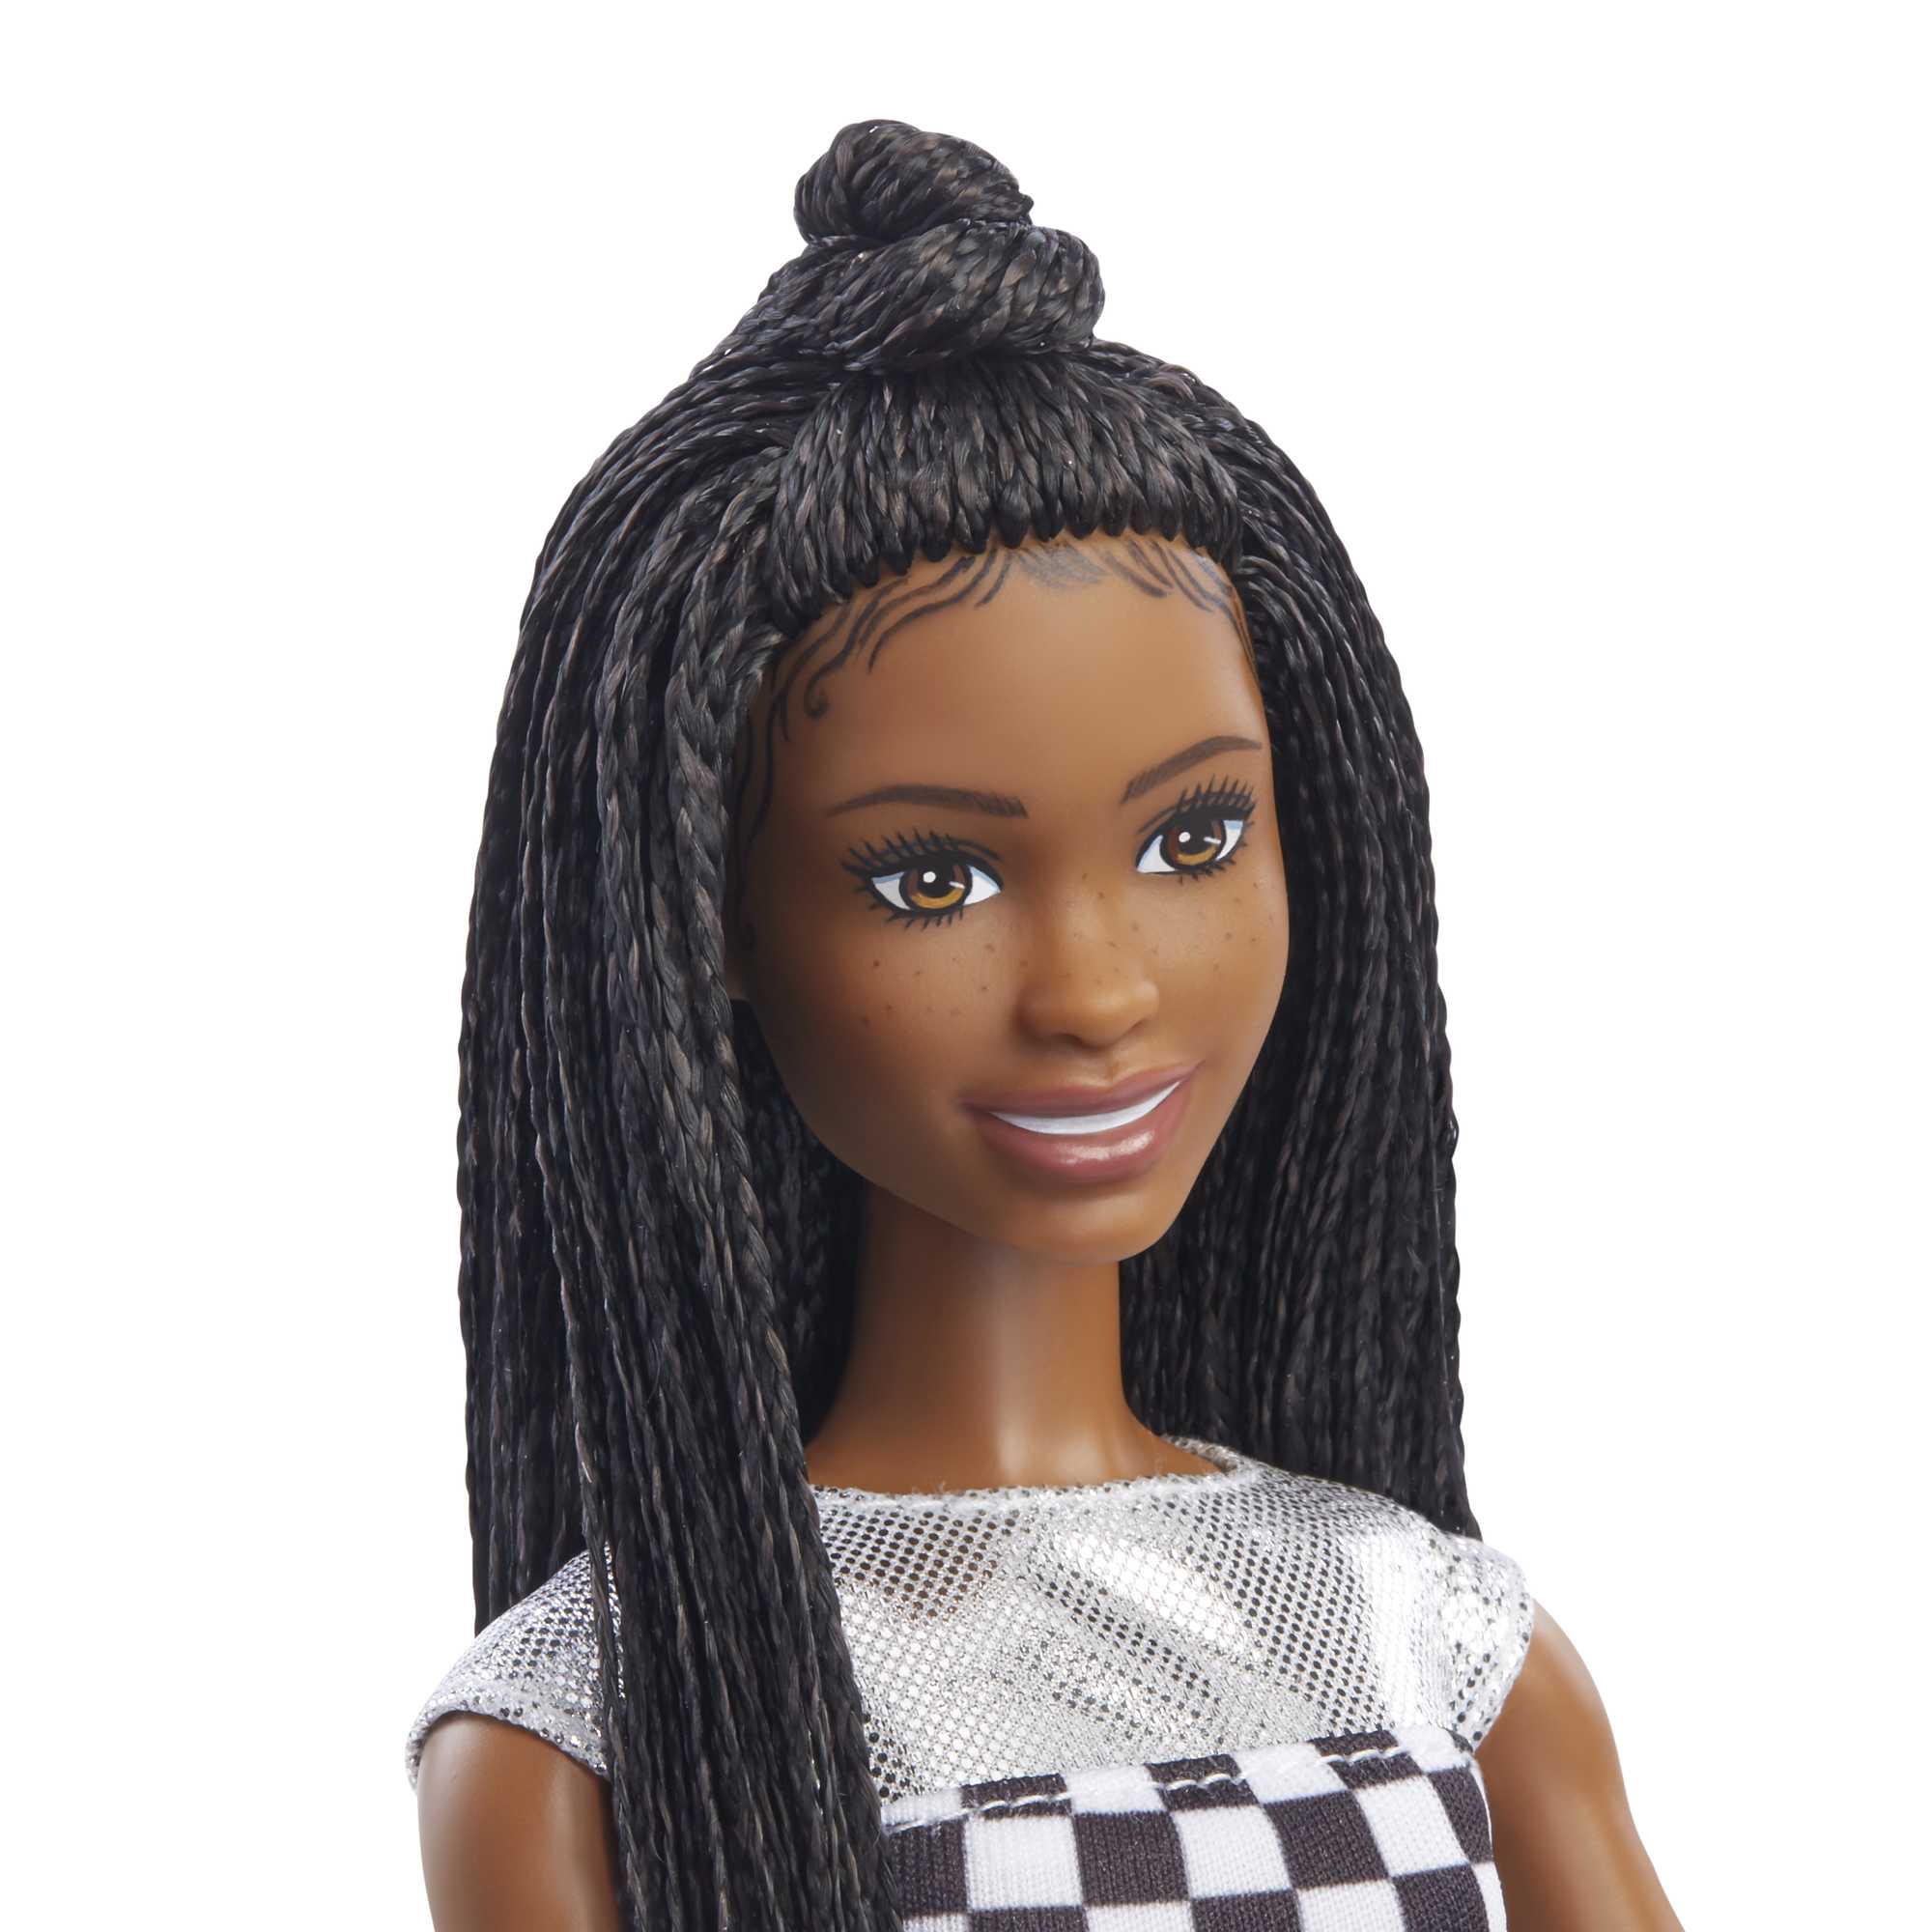 Barbie Big City Big Dreams “Brooklyn” Doll and Accessories | MATTEL